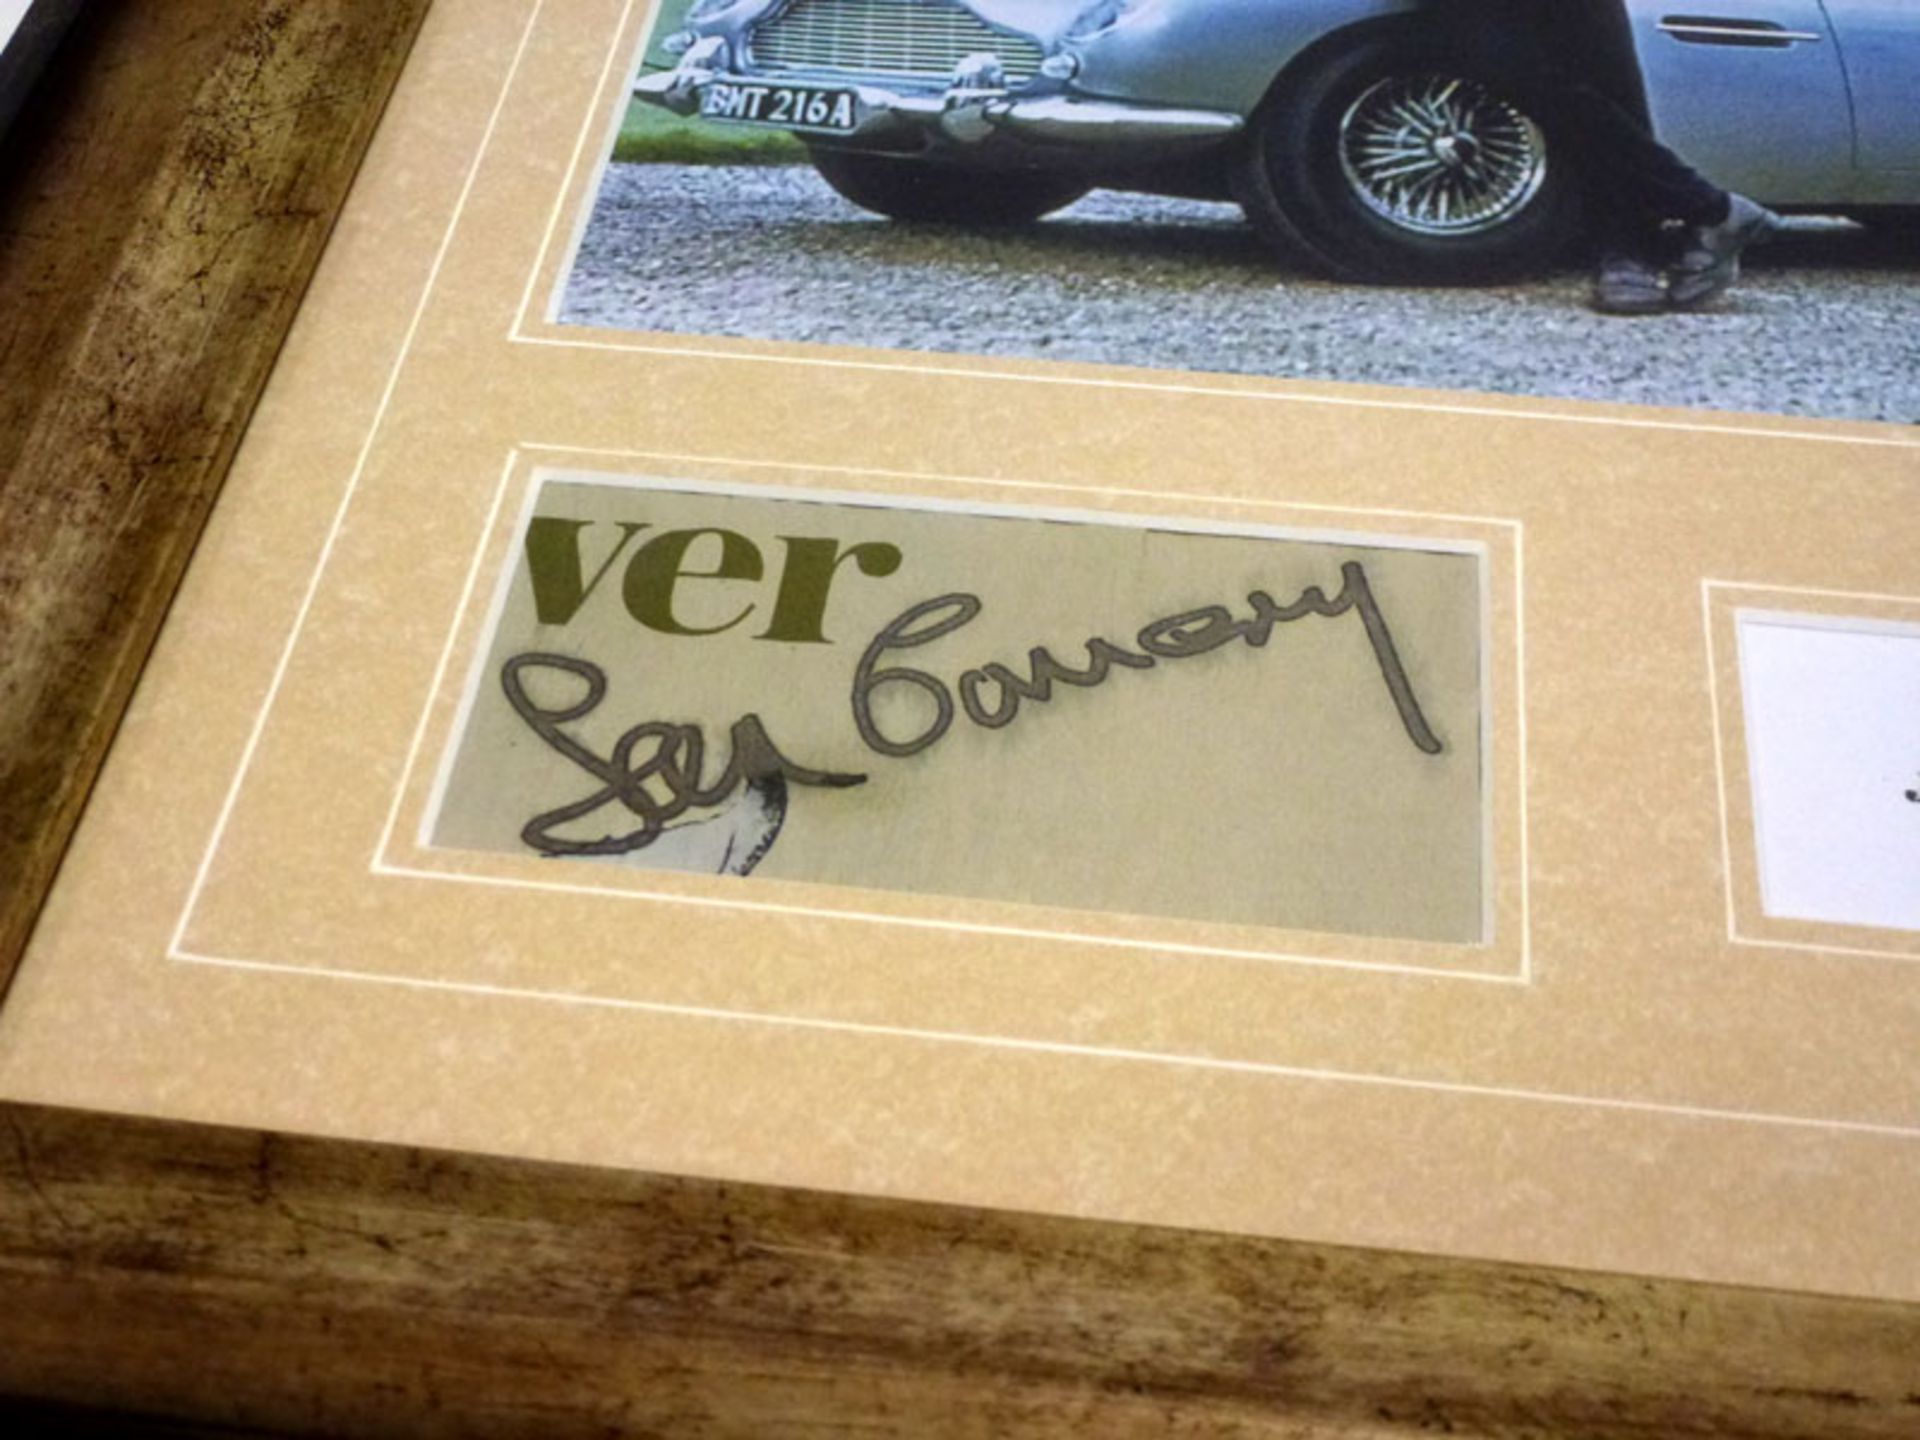 Sean Connery / James Bond Aston Martin DB5 Signed Presentation - Image 2 of 2